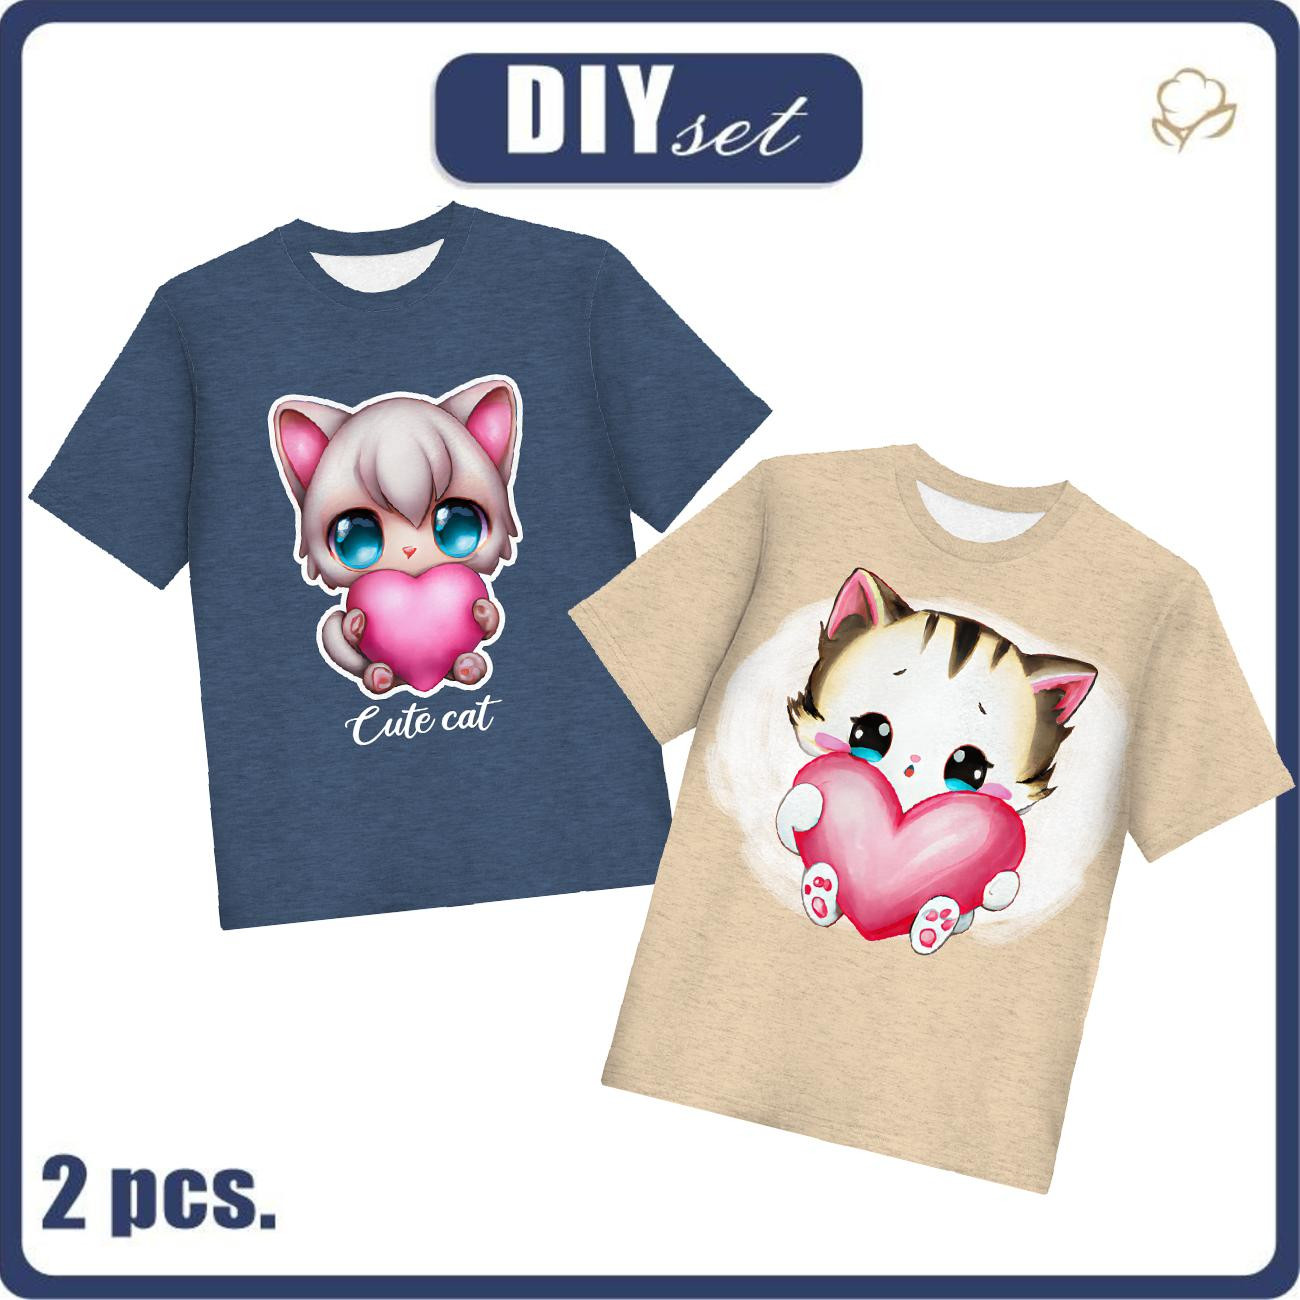 2-PACK - KID’S T-SHIRT - SWEET CATS pat. 5 - sewing set